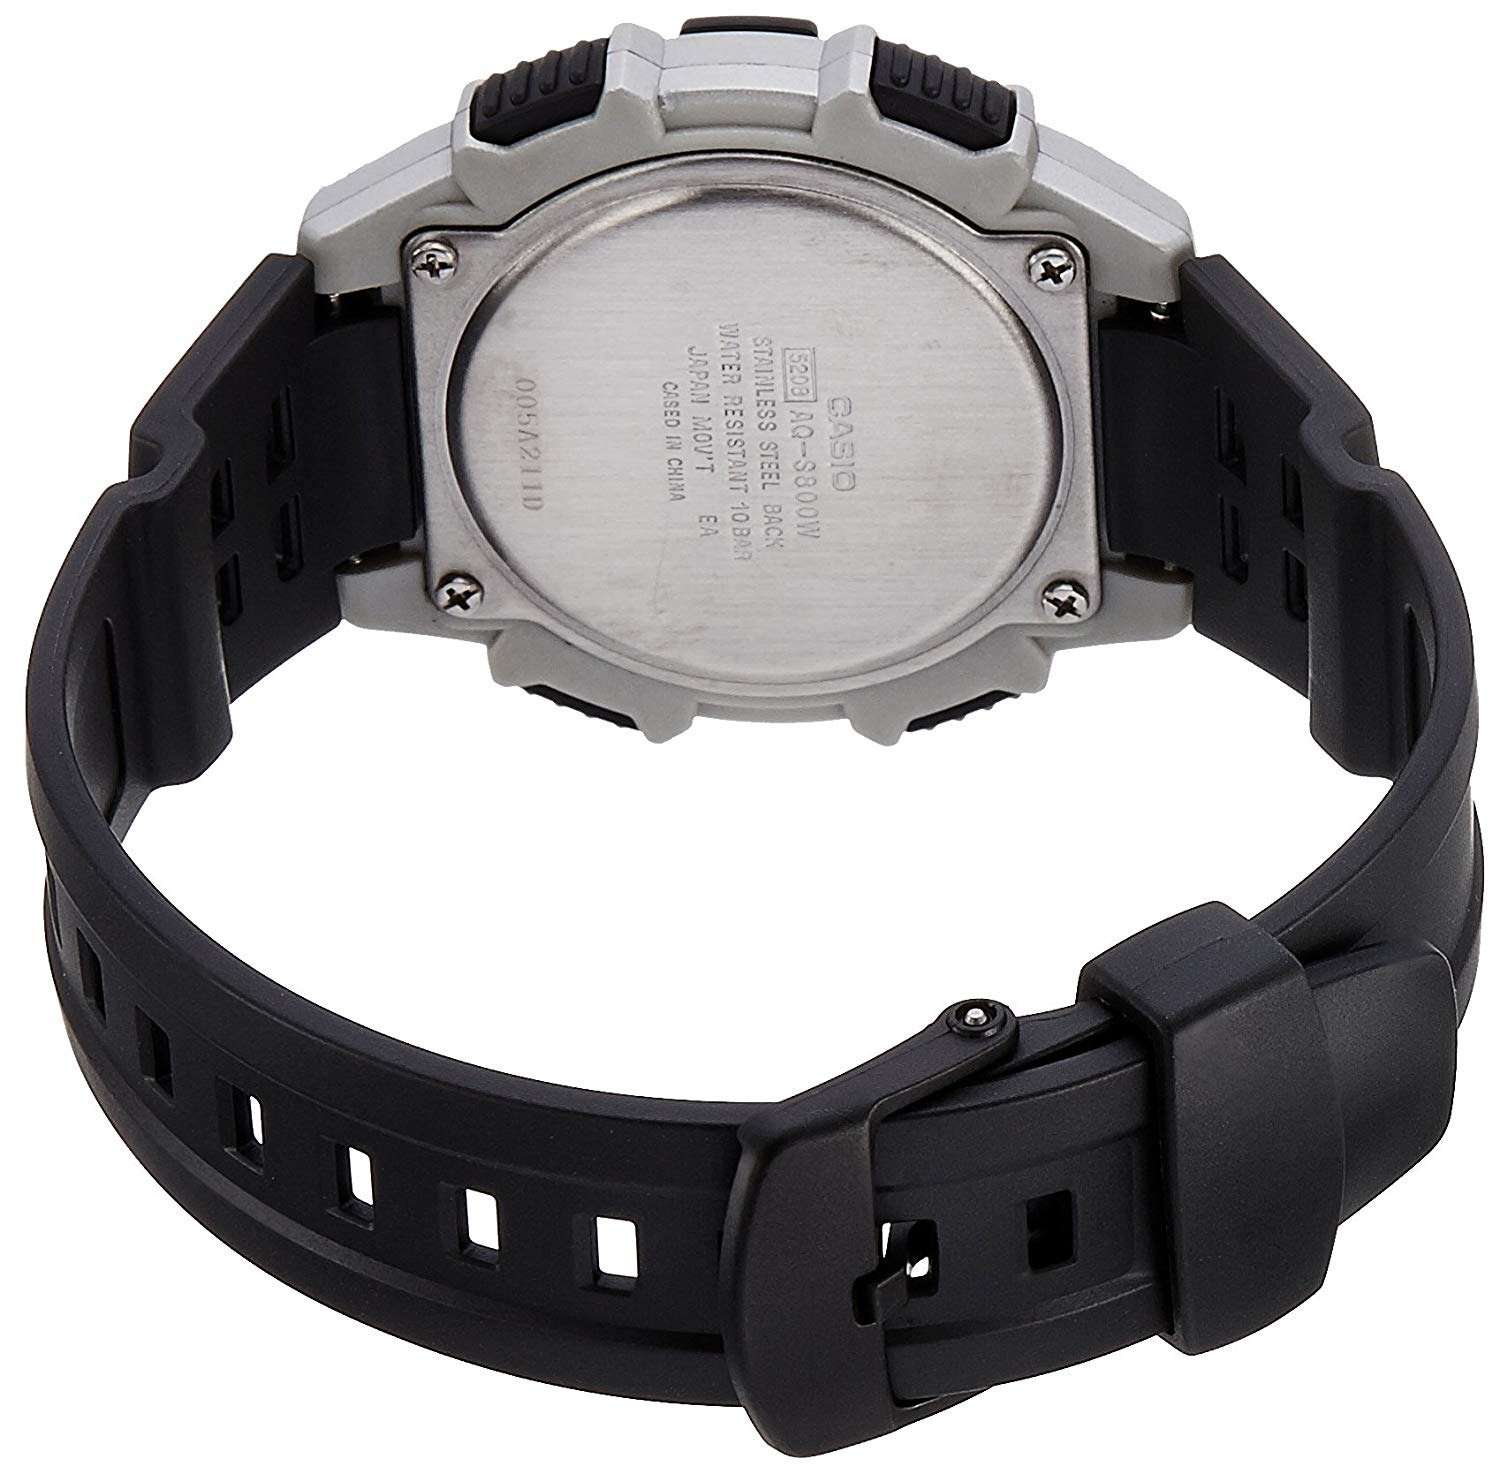 Casio AQ-S800W-1E Black Solar Powered Watch for Men-Watch Portal Philippines